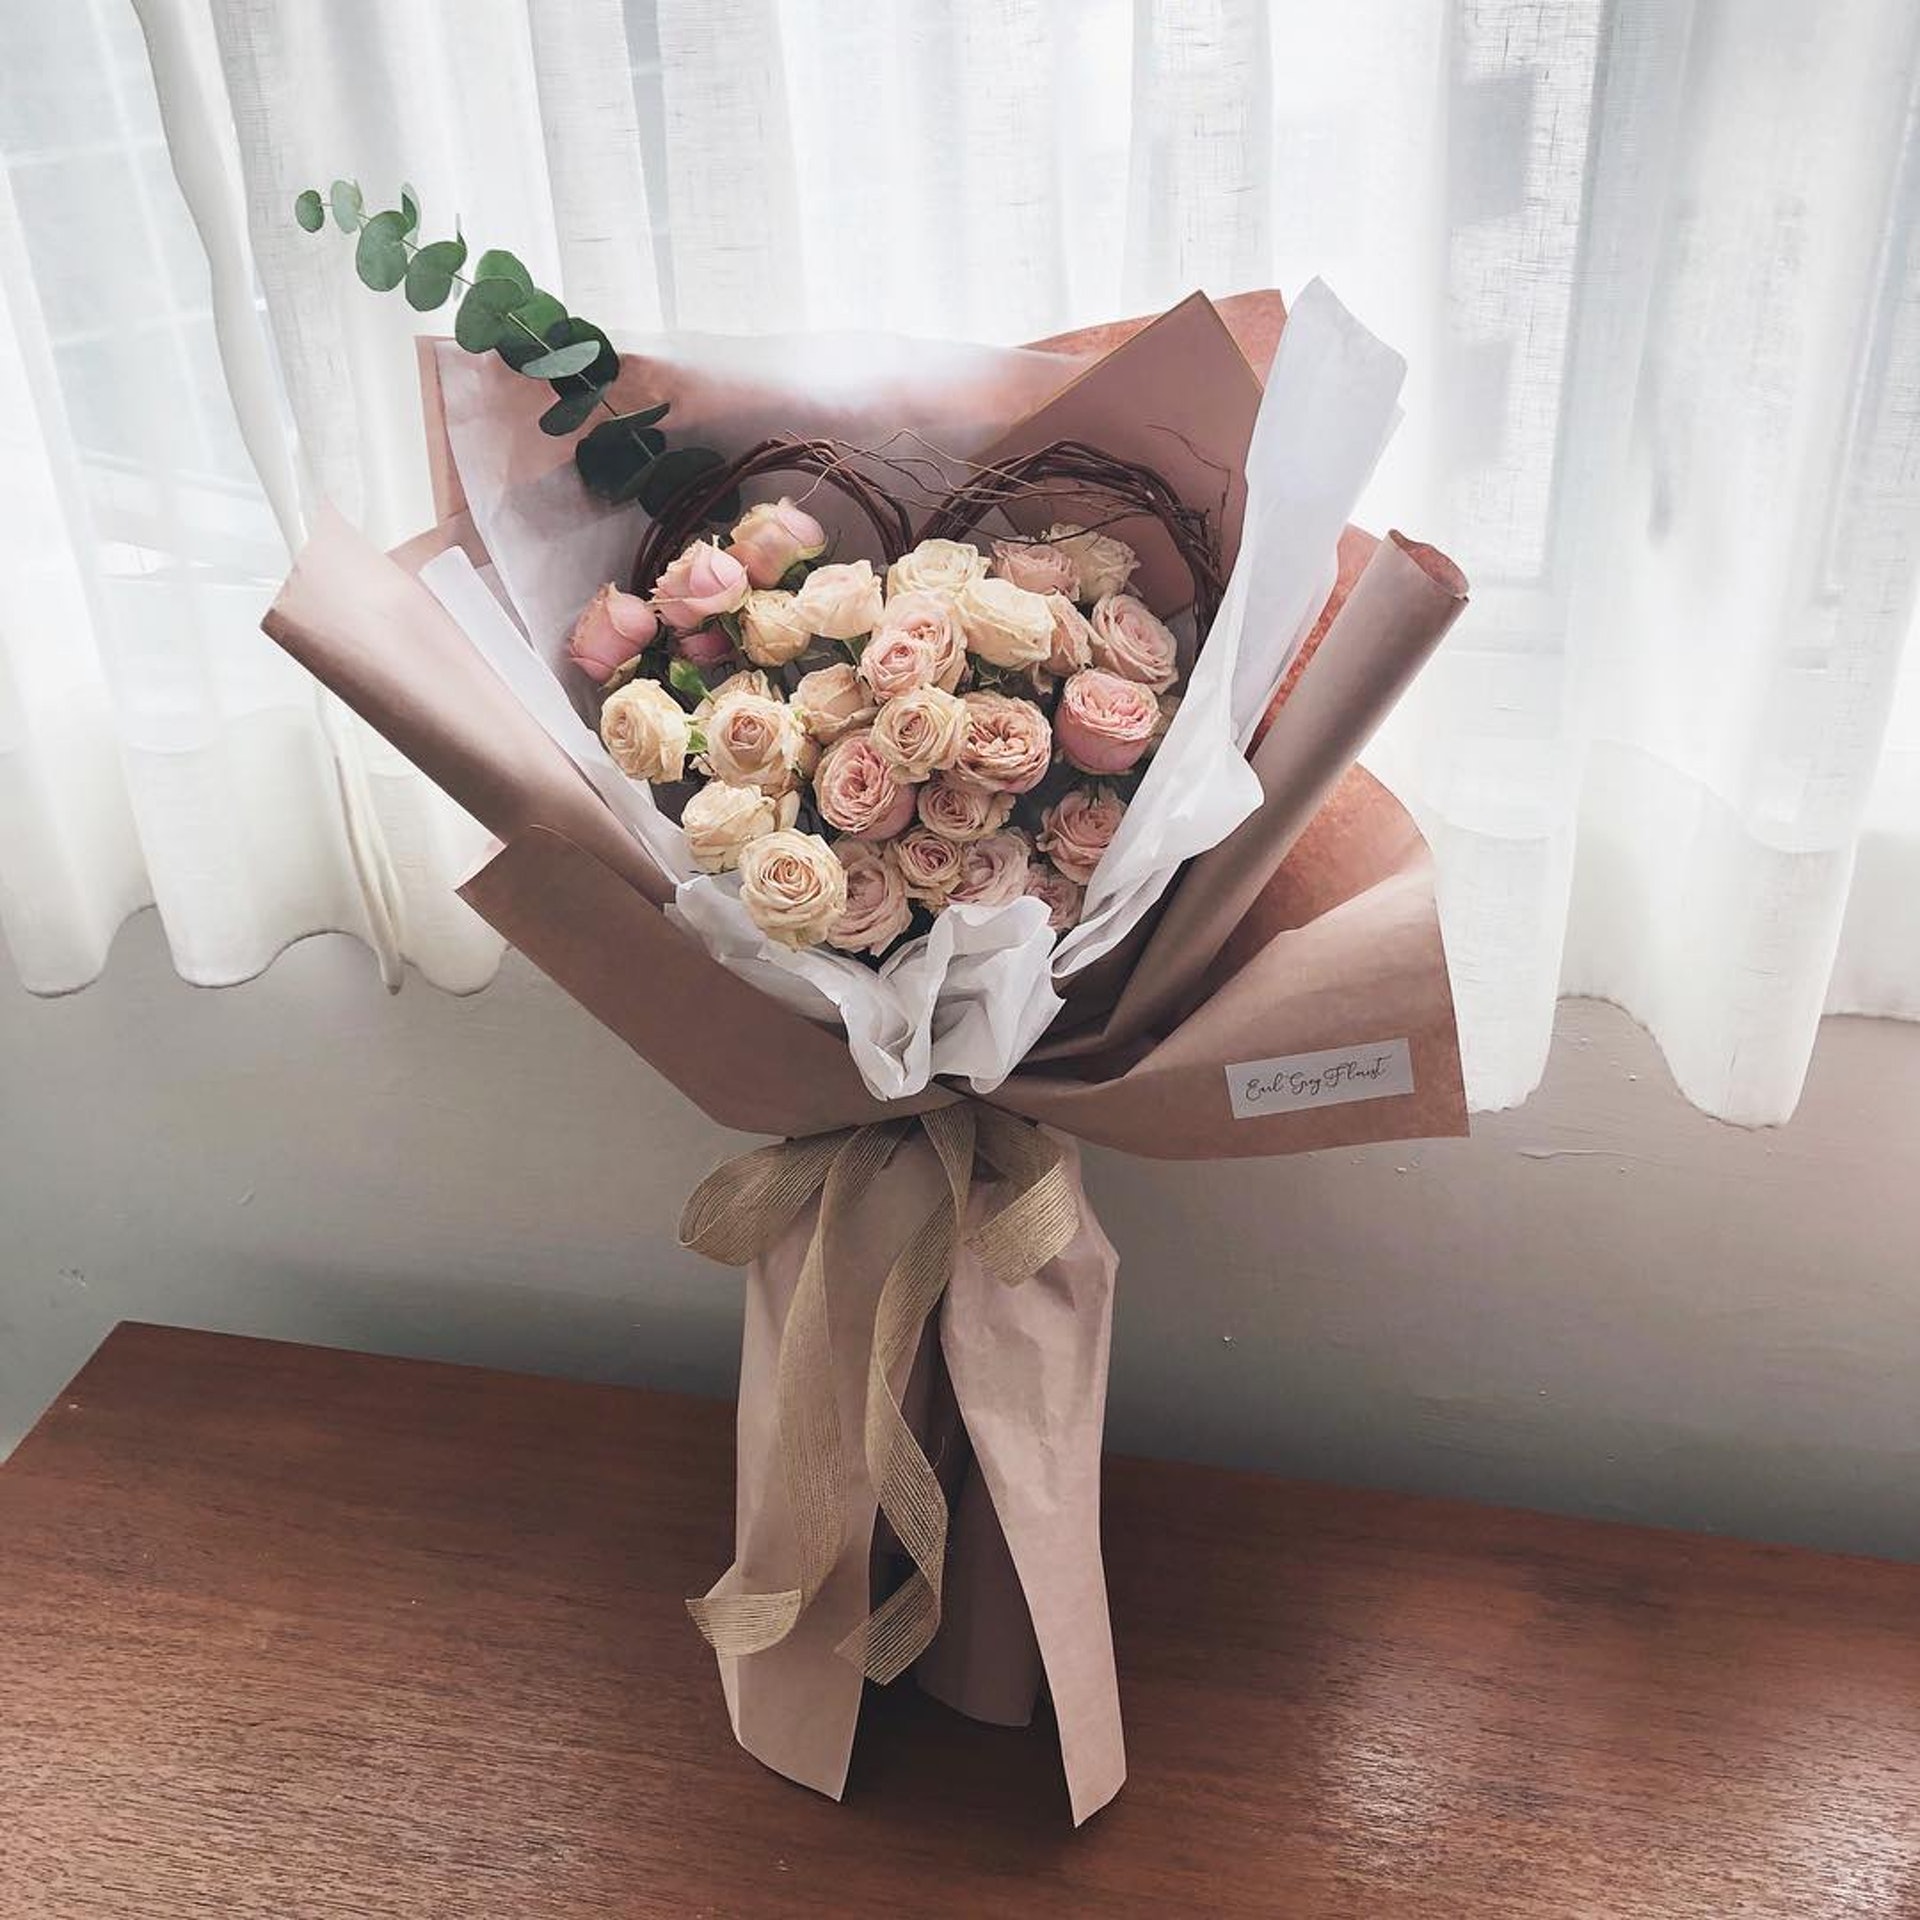 心型花束$780（Instagram：earlgrey.florist）